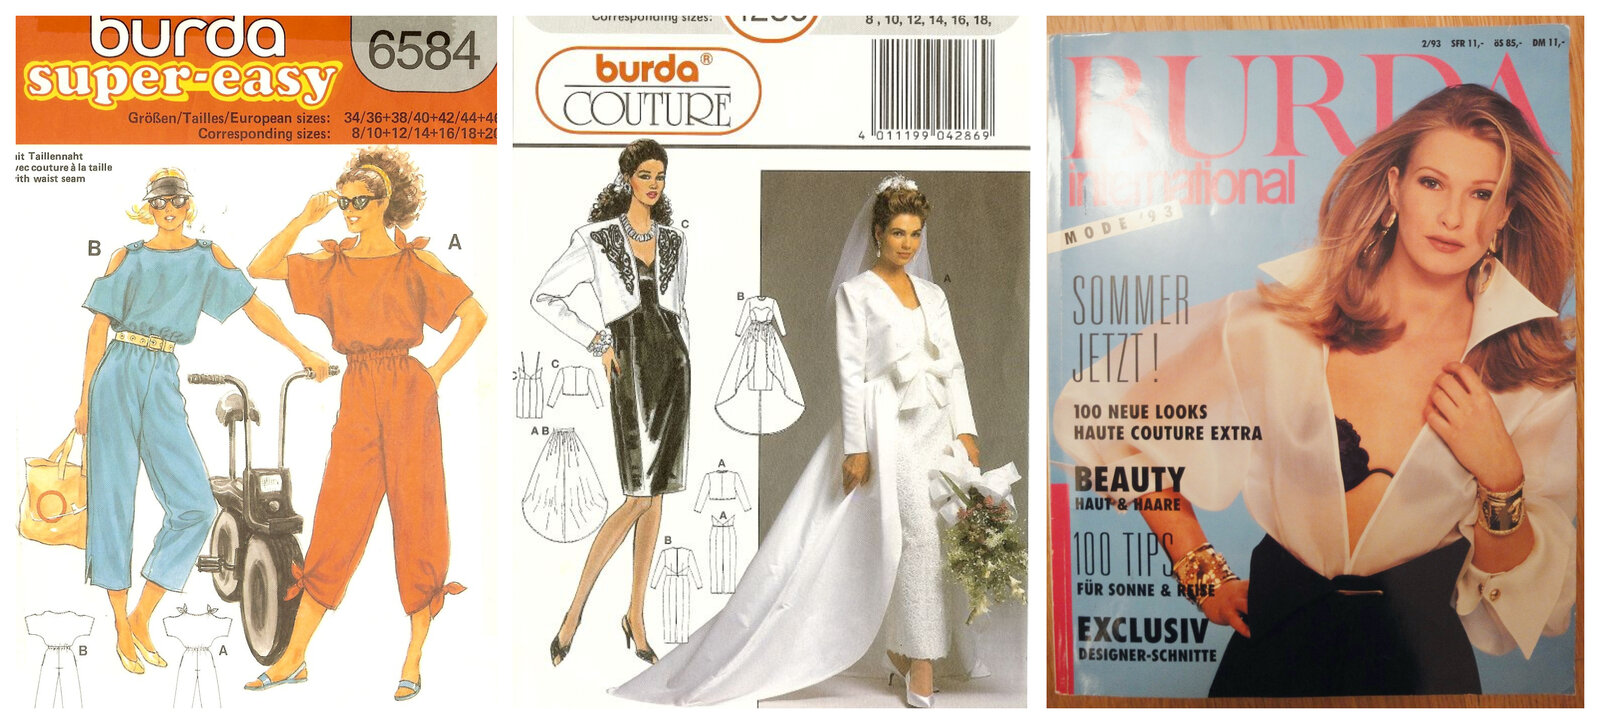 1980s Burda super-easy pattern; 1990s Burda Couture pattern; Burda international 1993